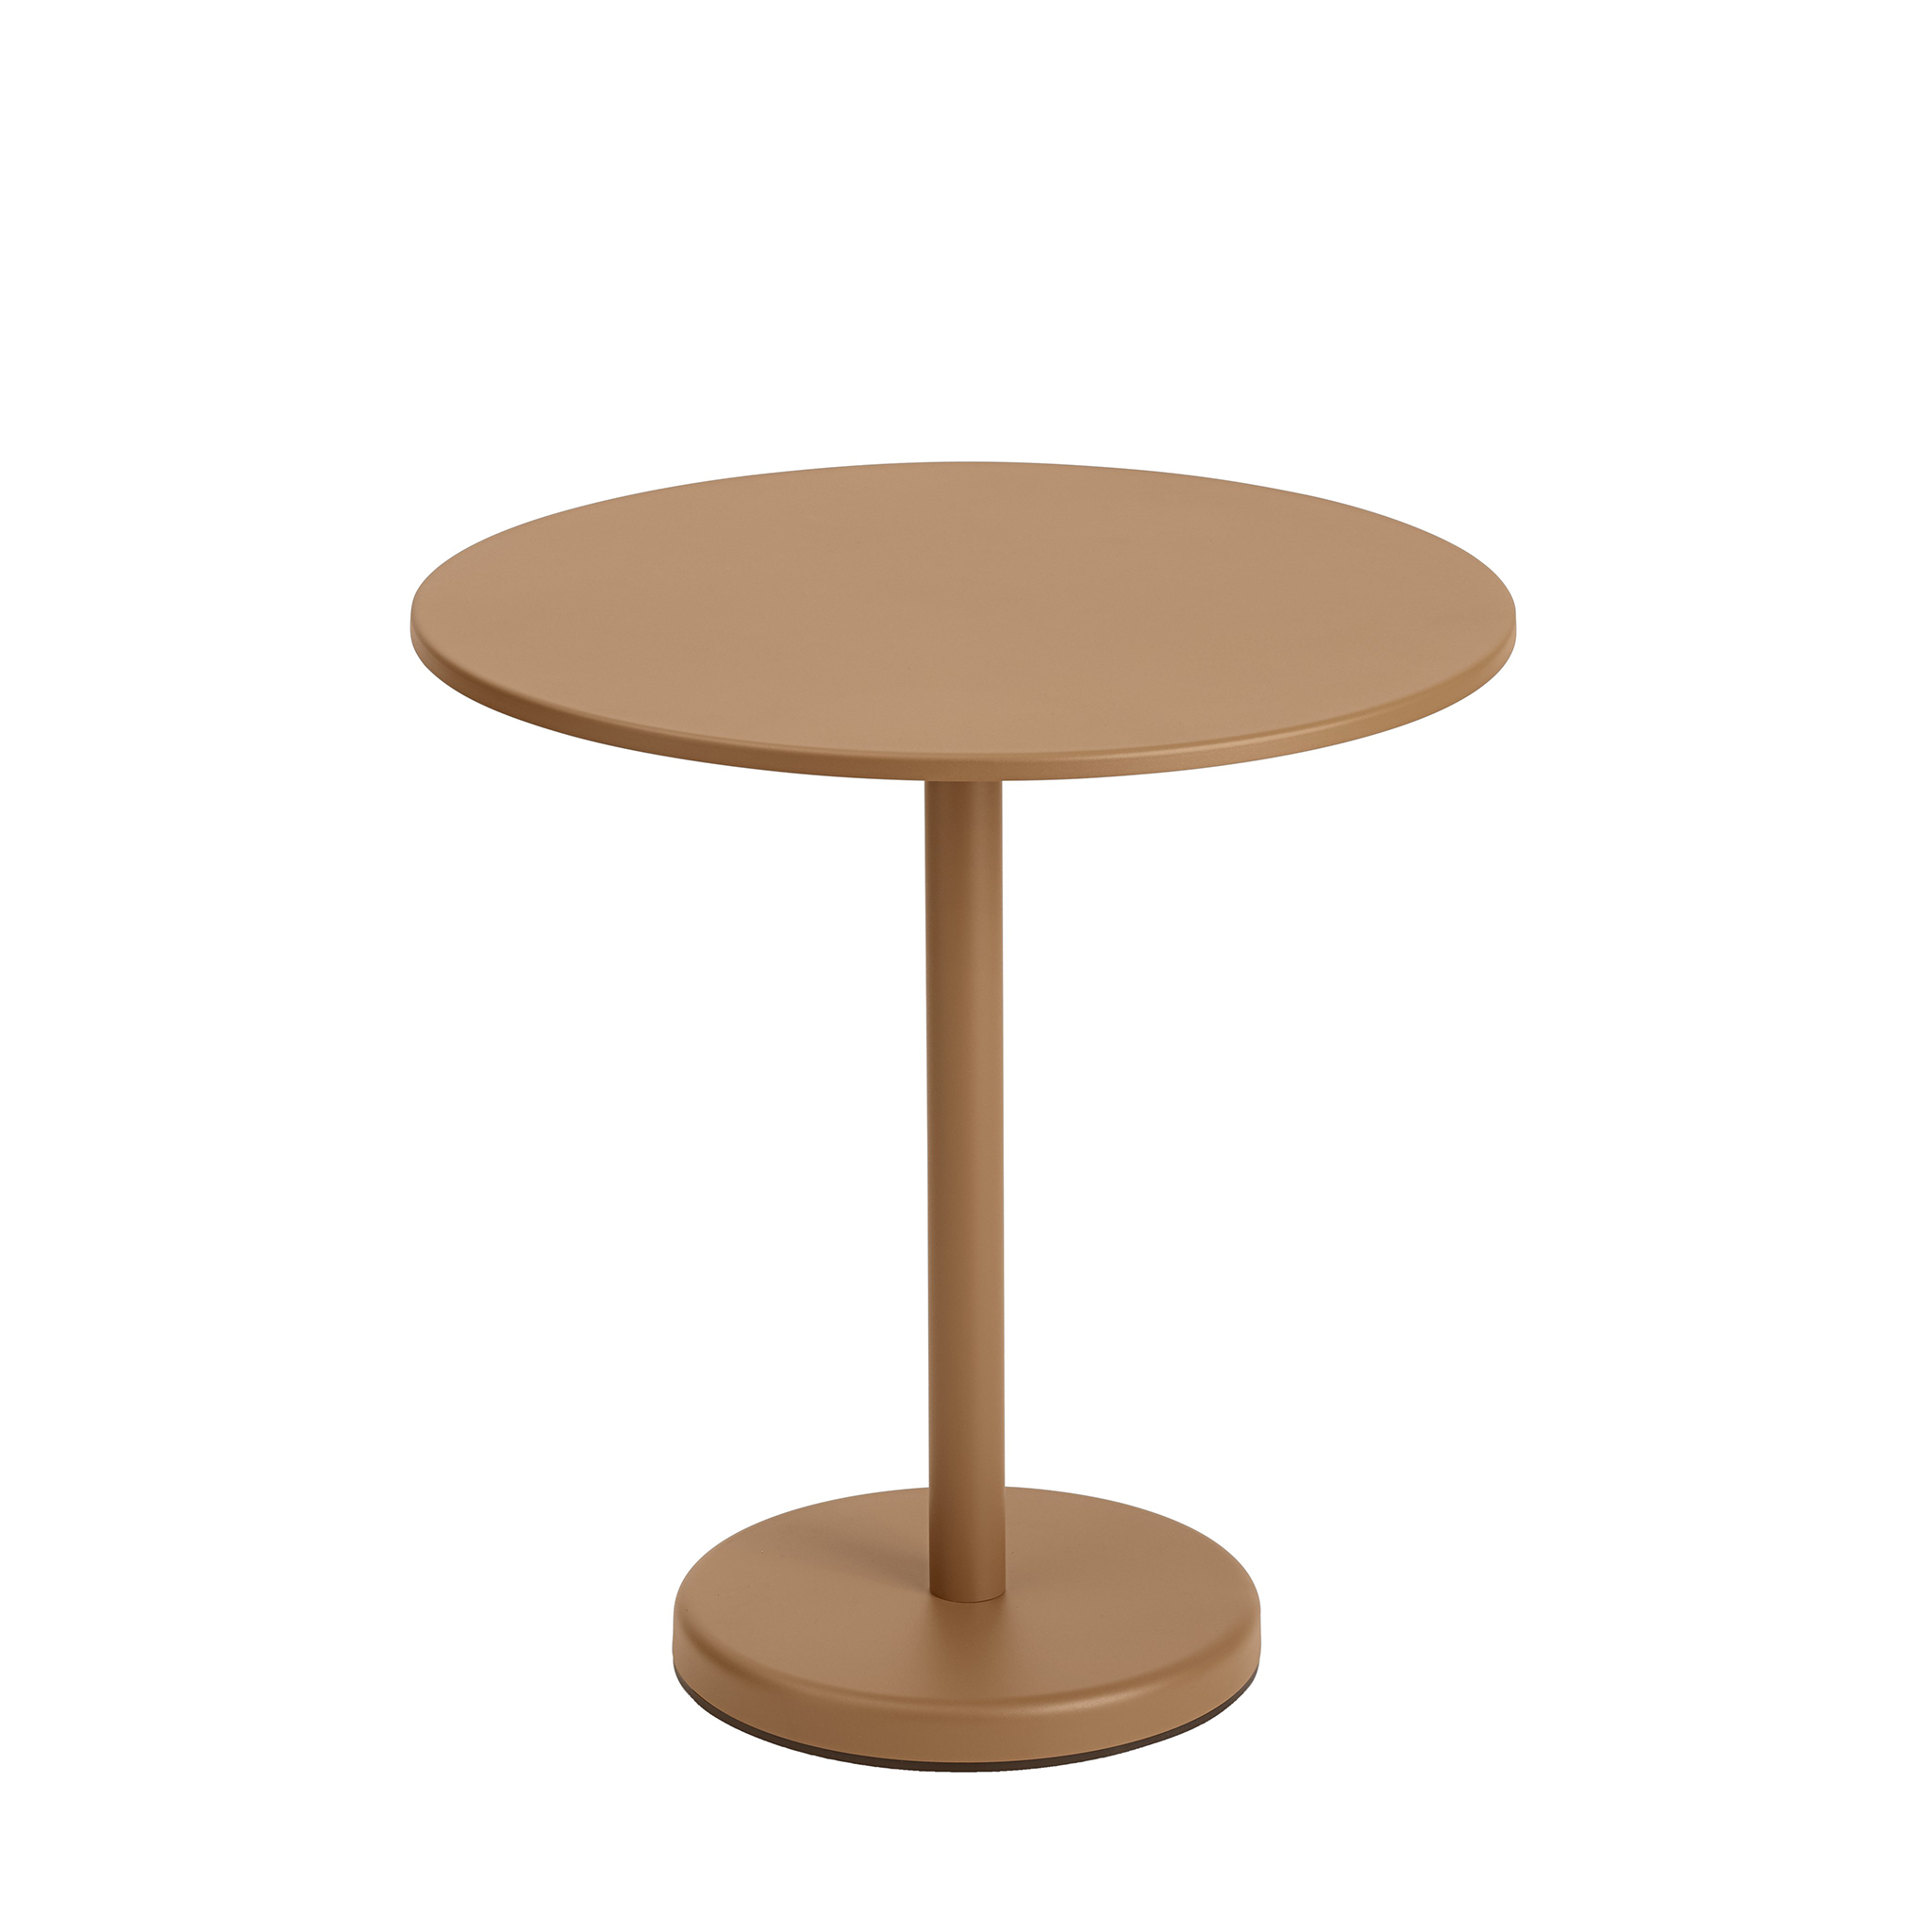 Linear Steel Café Table by Thomas Bentzen for Muuto